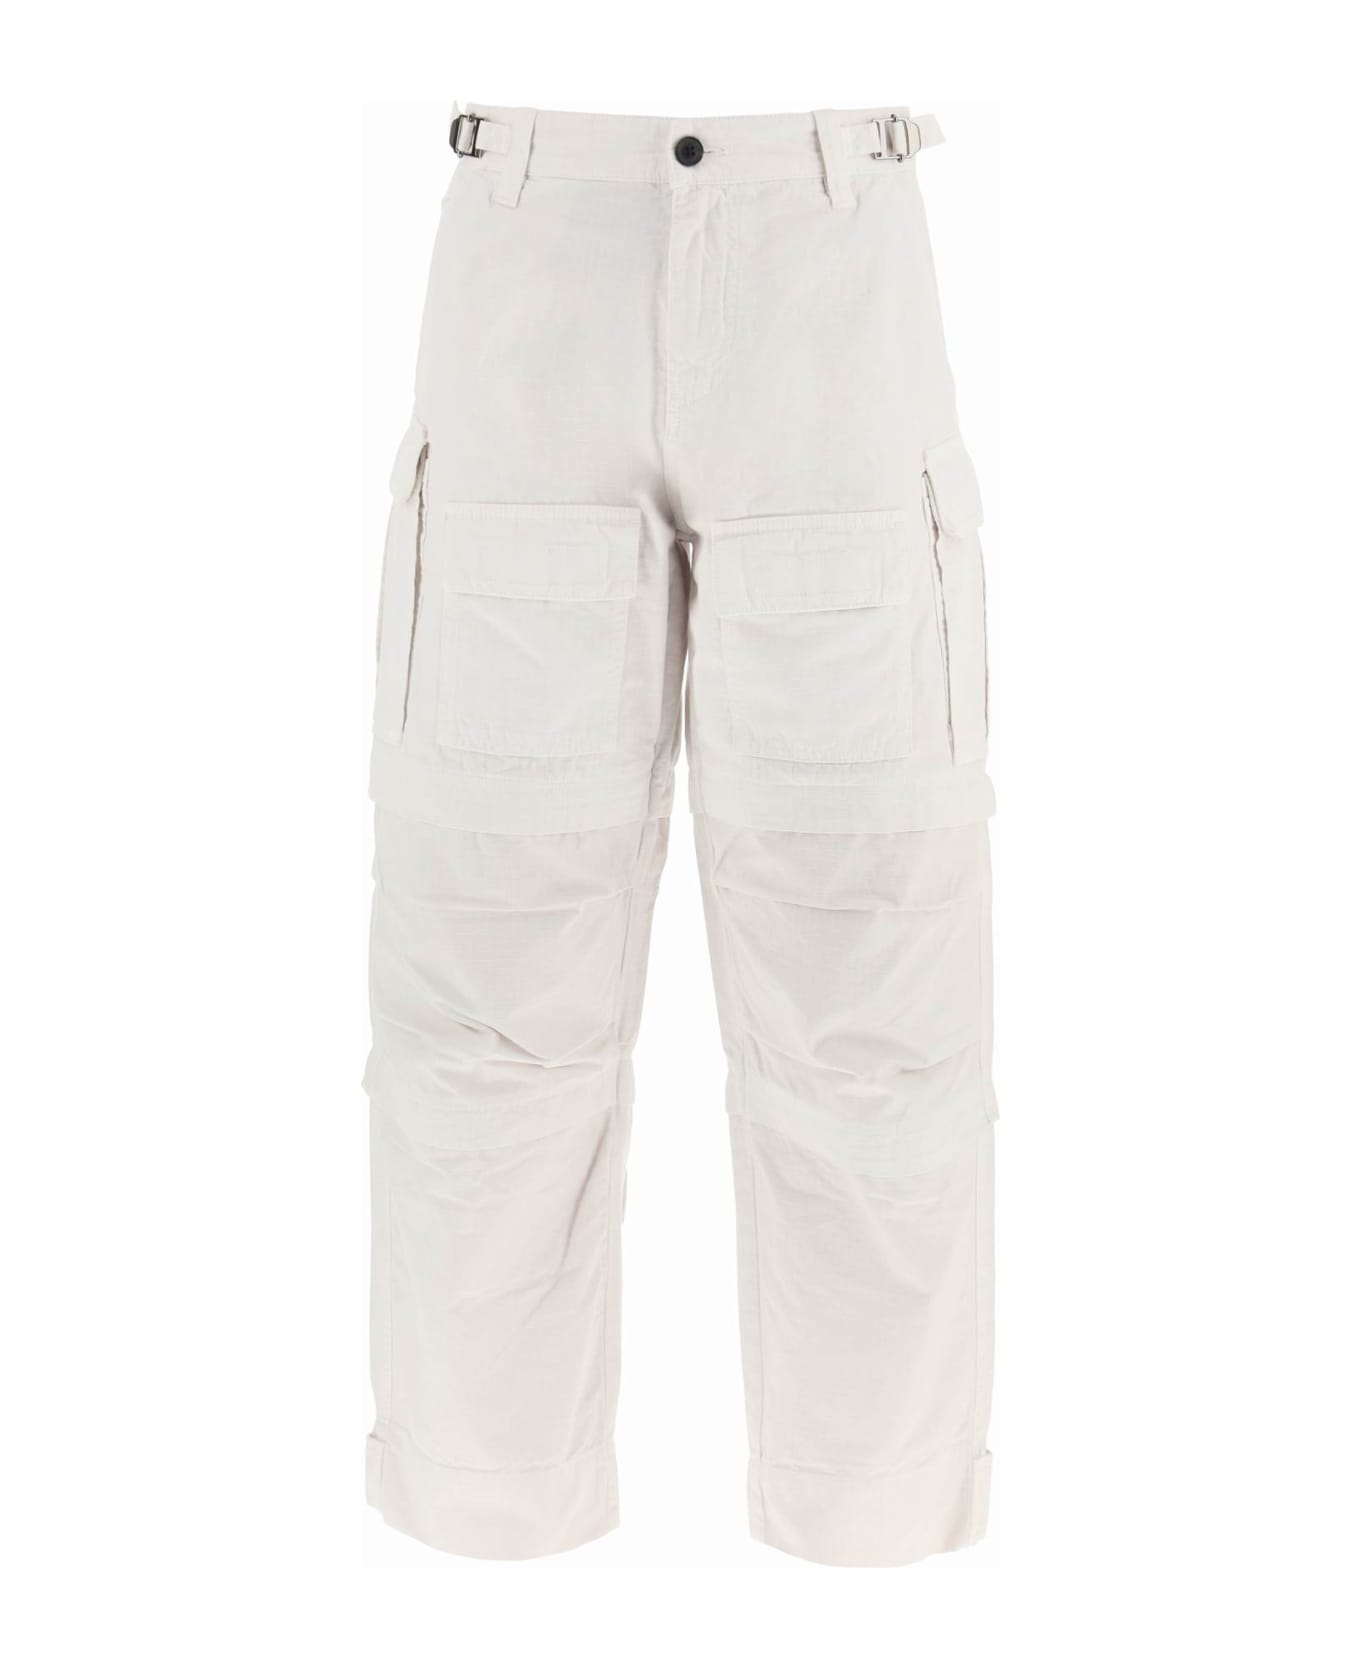 DARKPARK 'julia' Ripstop Cotton Cargo Pants - OFF WHITE (White)